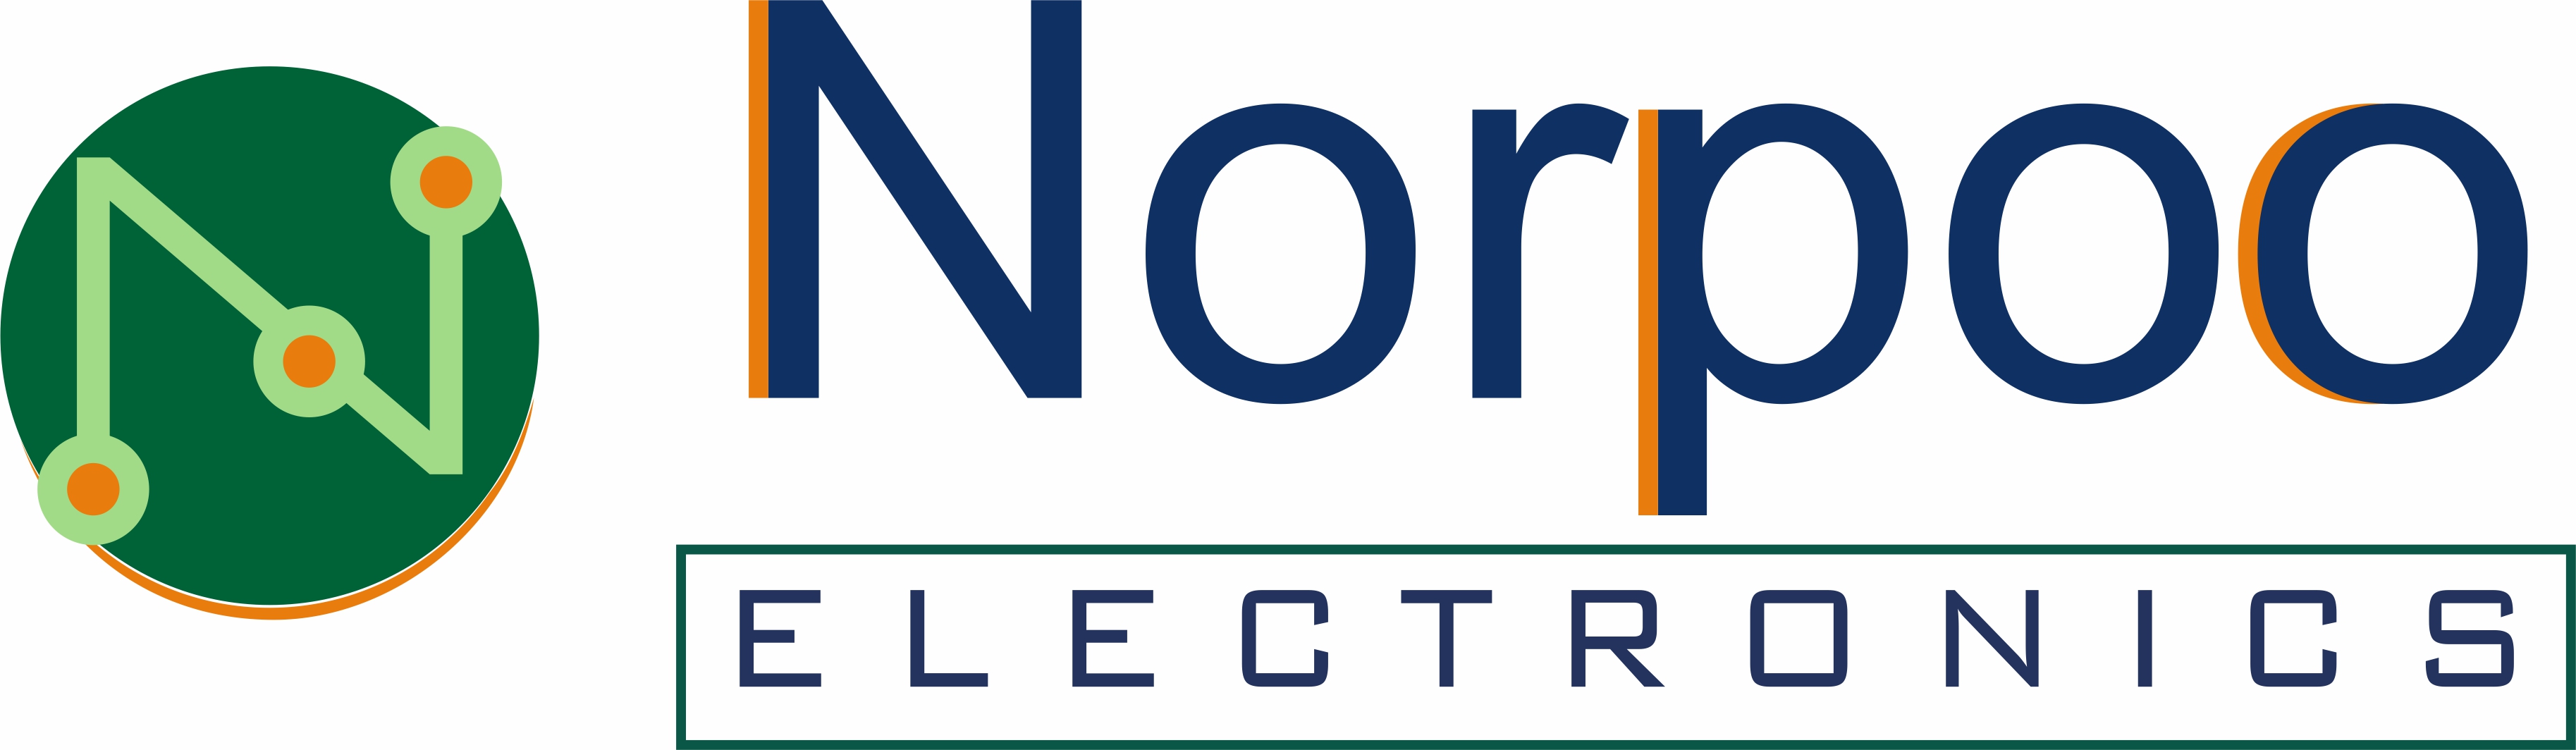 Norpoo Electronics